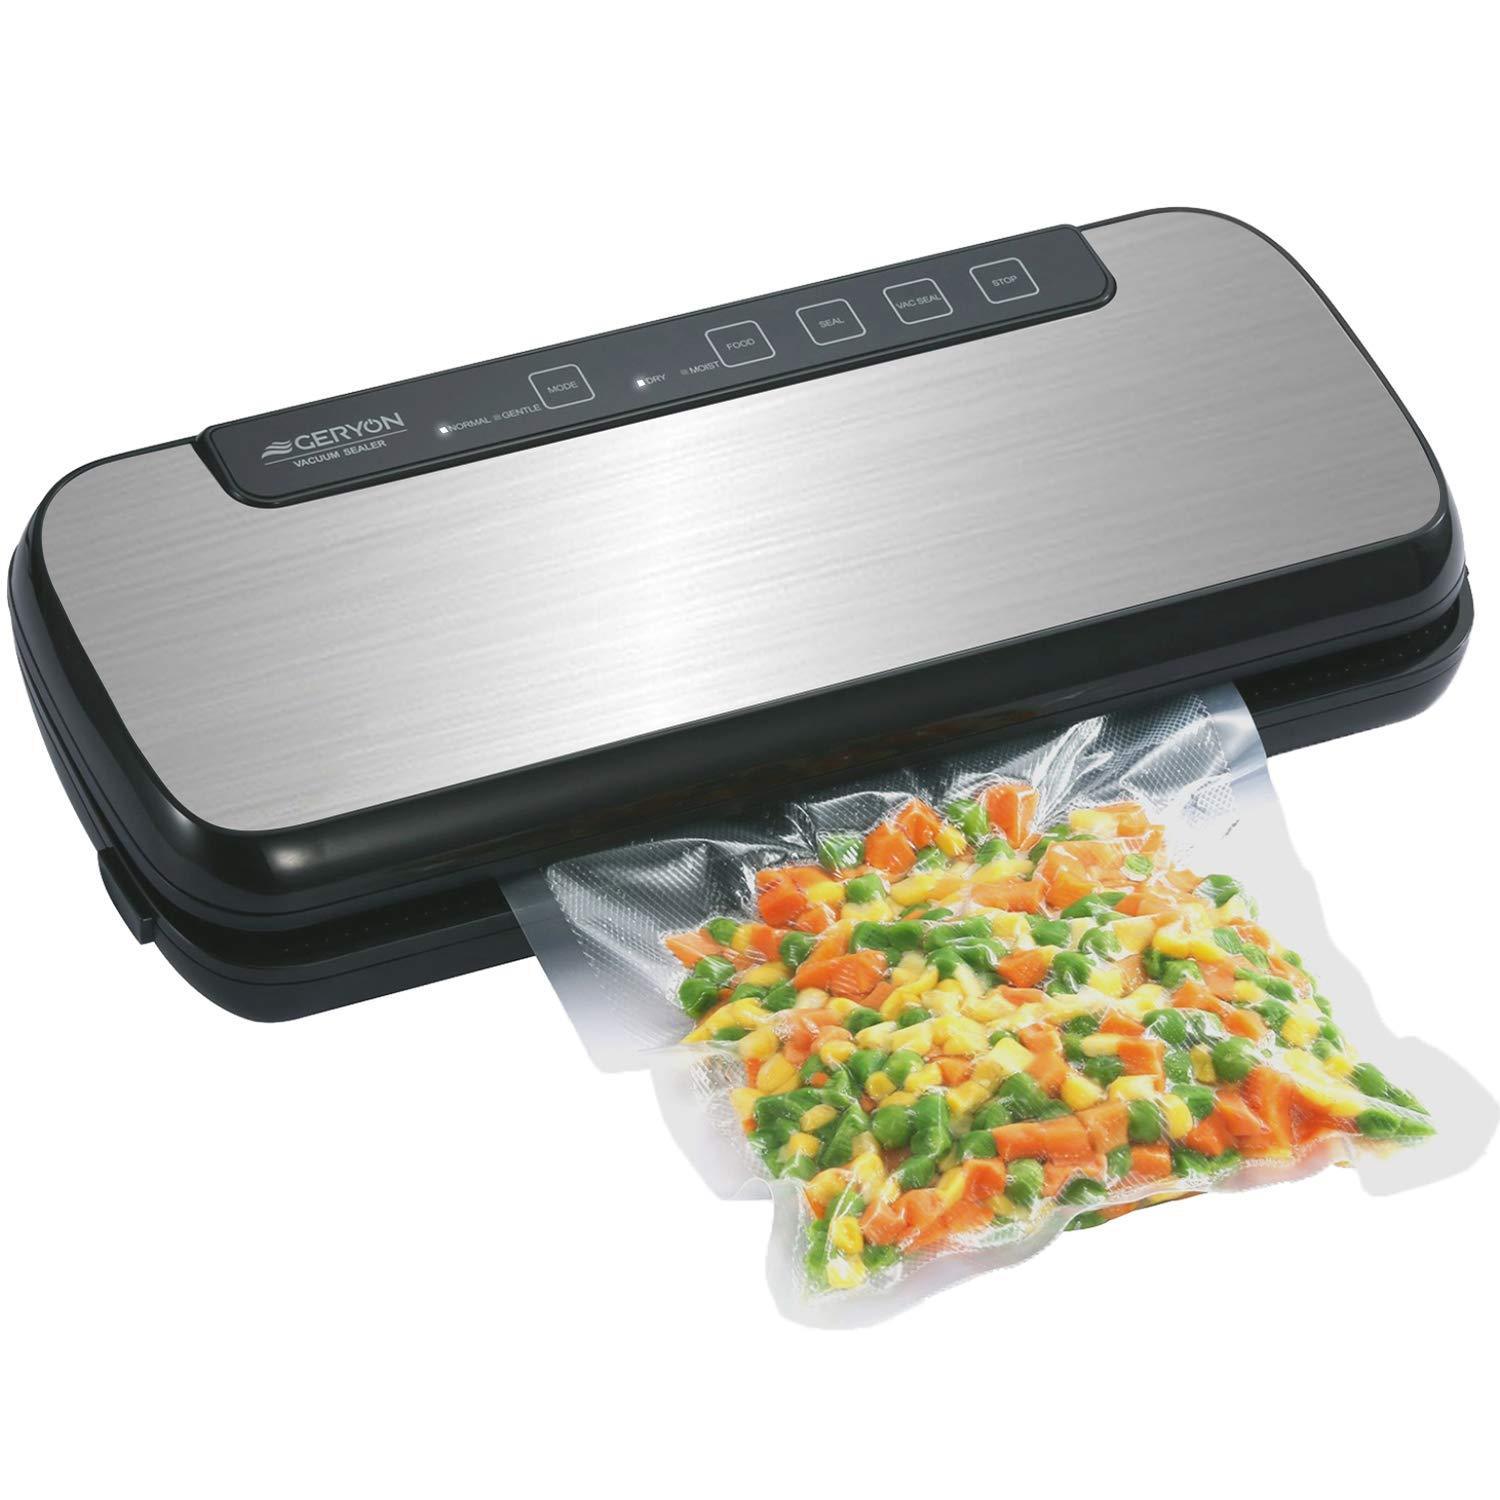 GERYON Vacuum Sealer Automatic Food Sealer Machine w/ Starter Bags & Roll